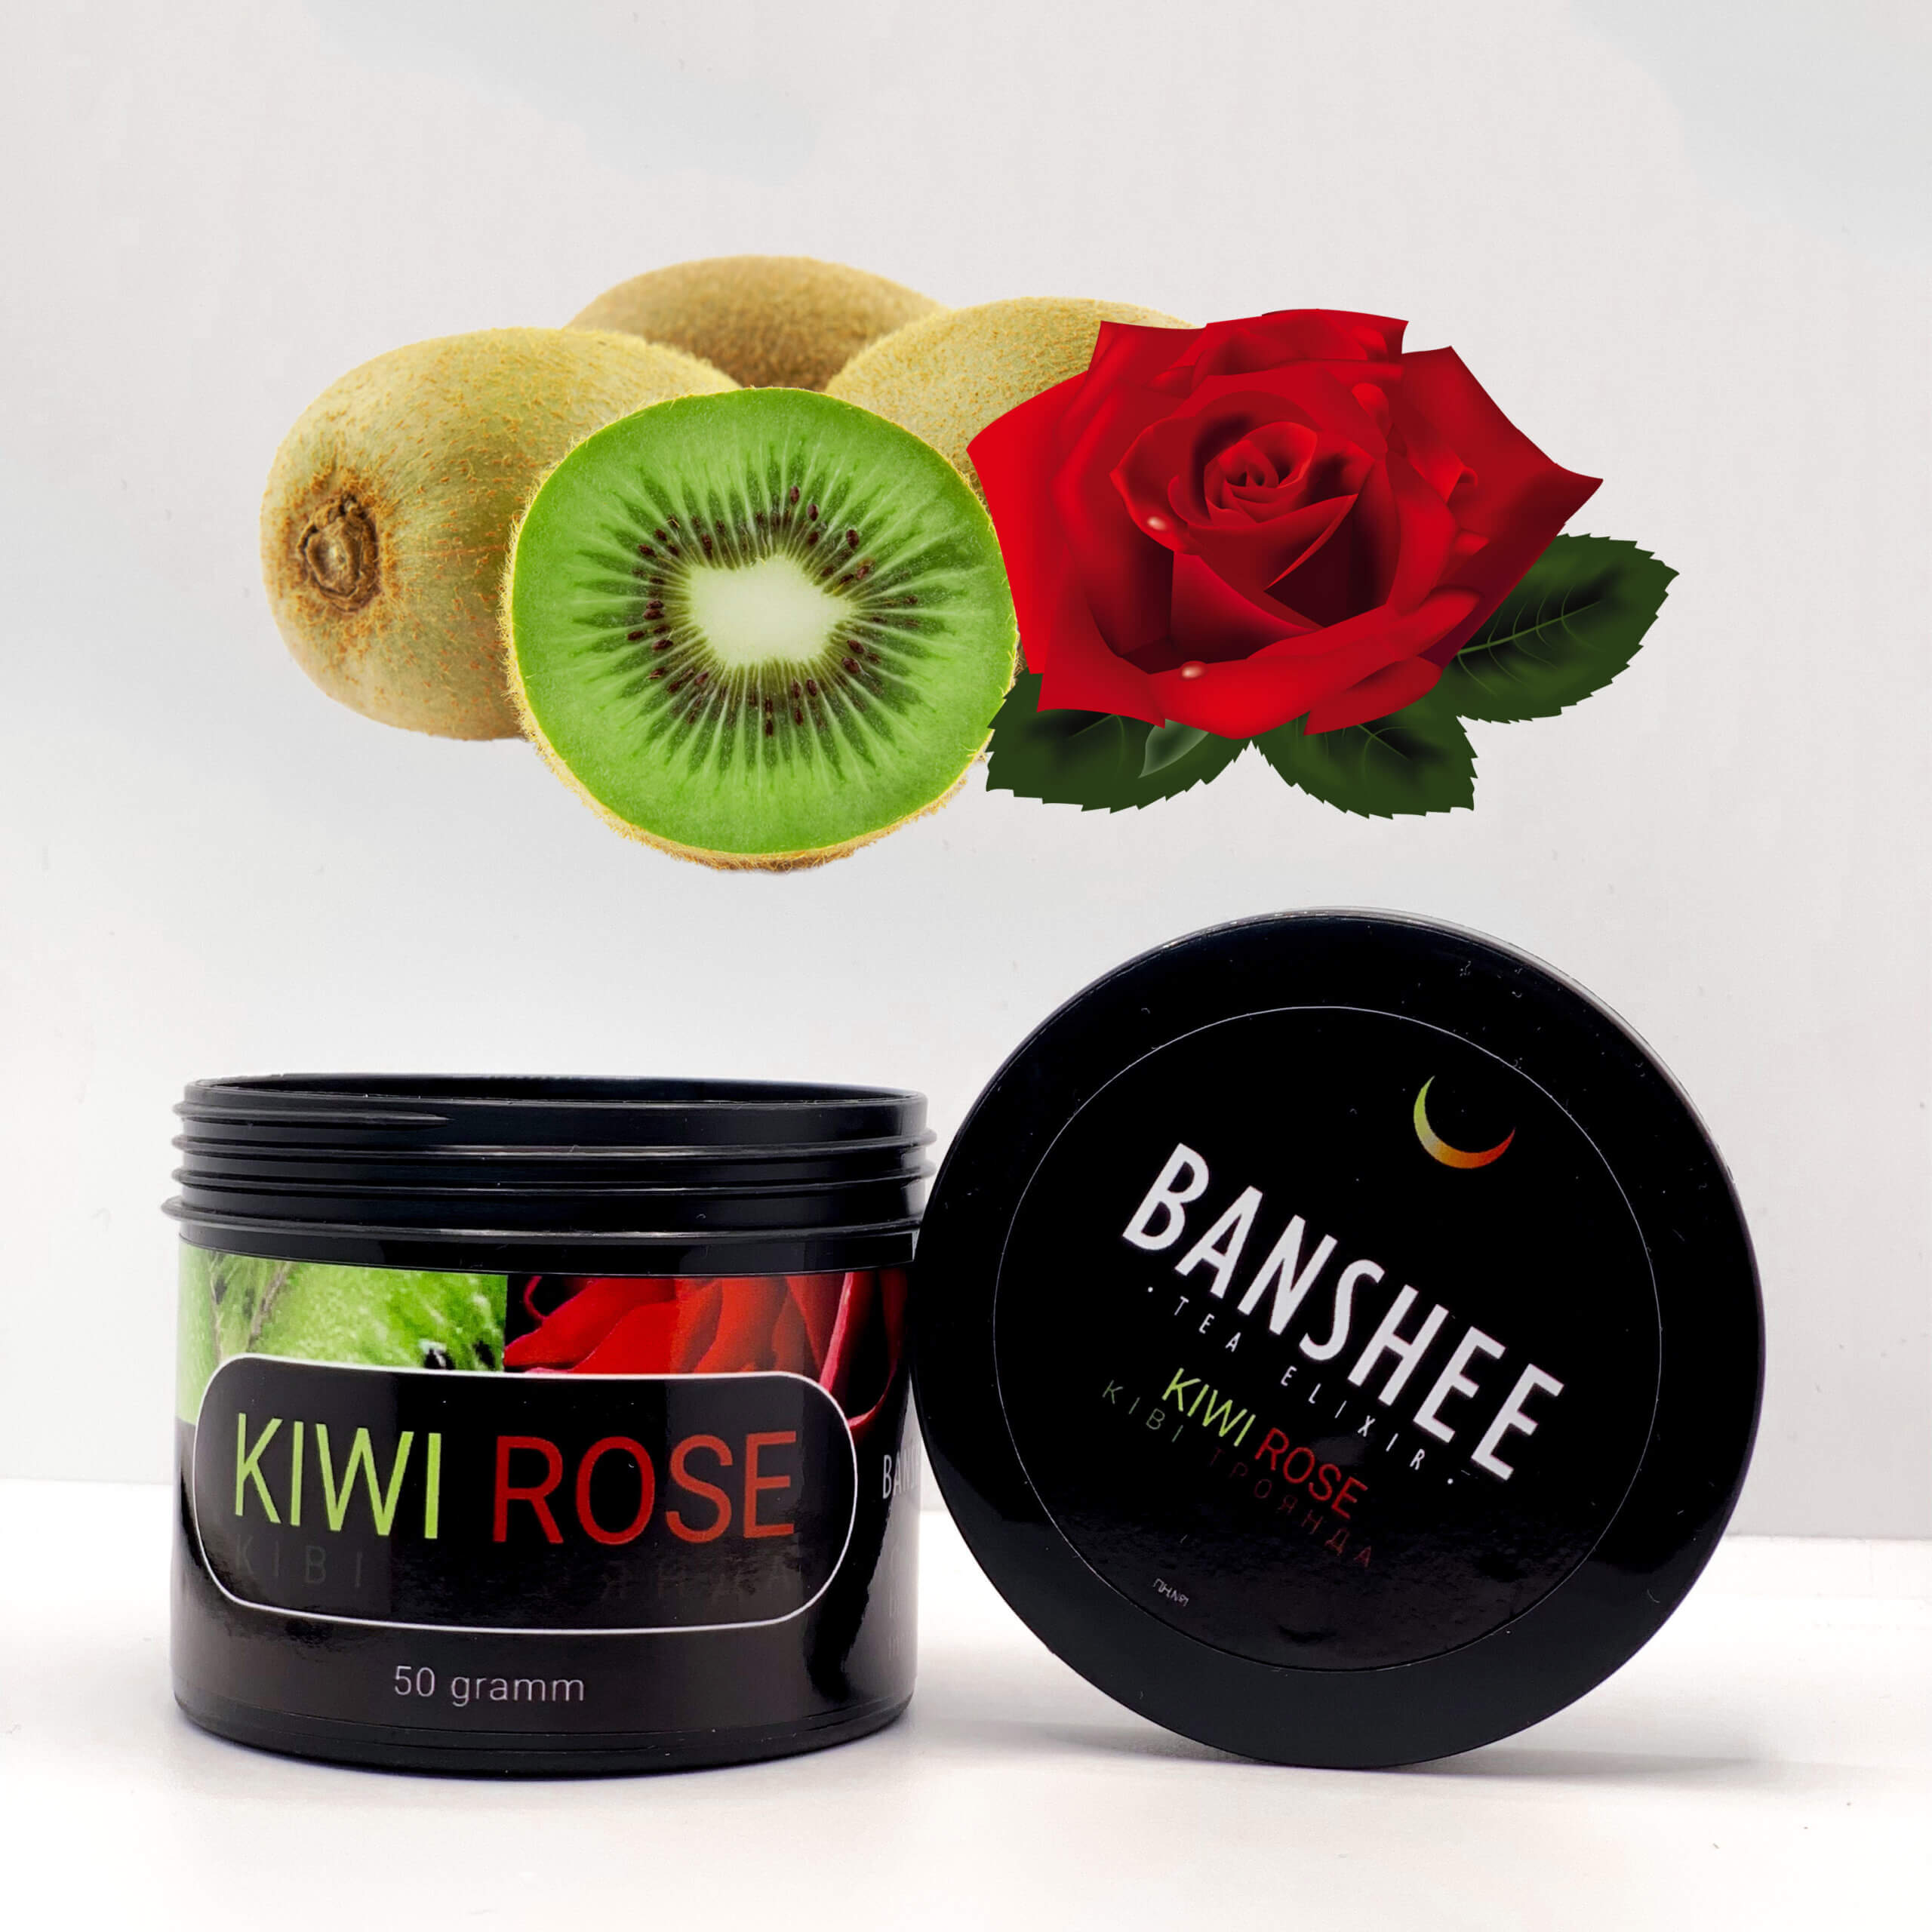 Banshee Dark Kiwi rose - Киви роза